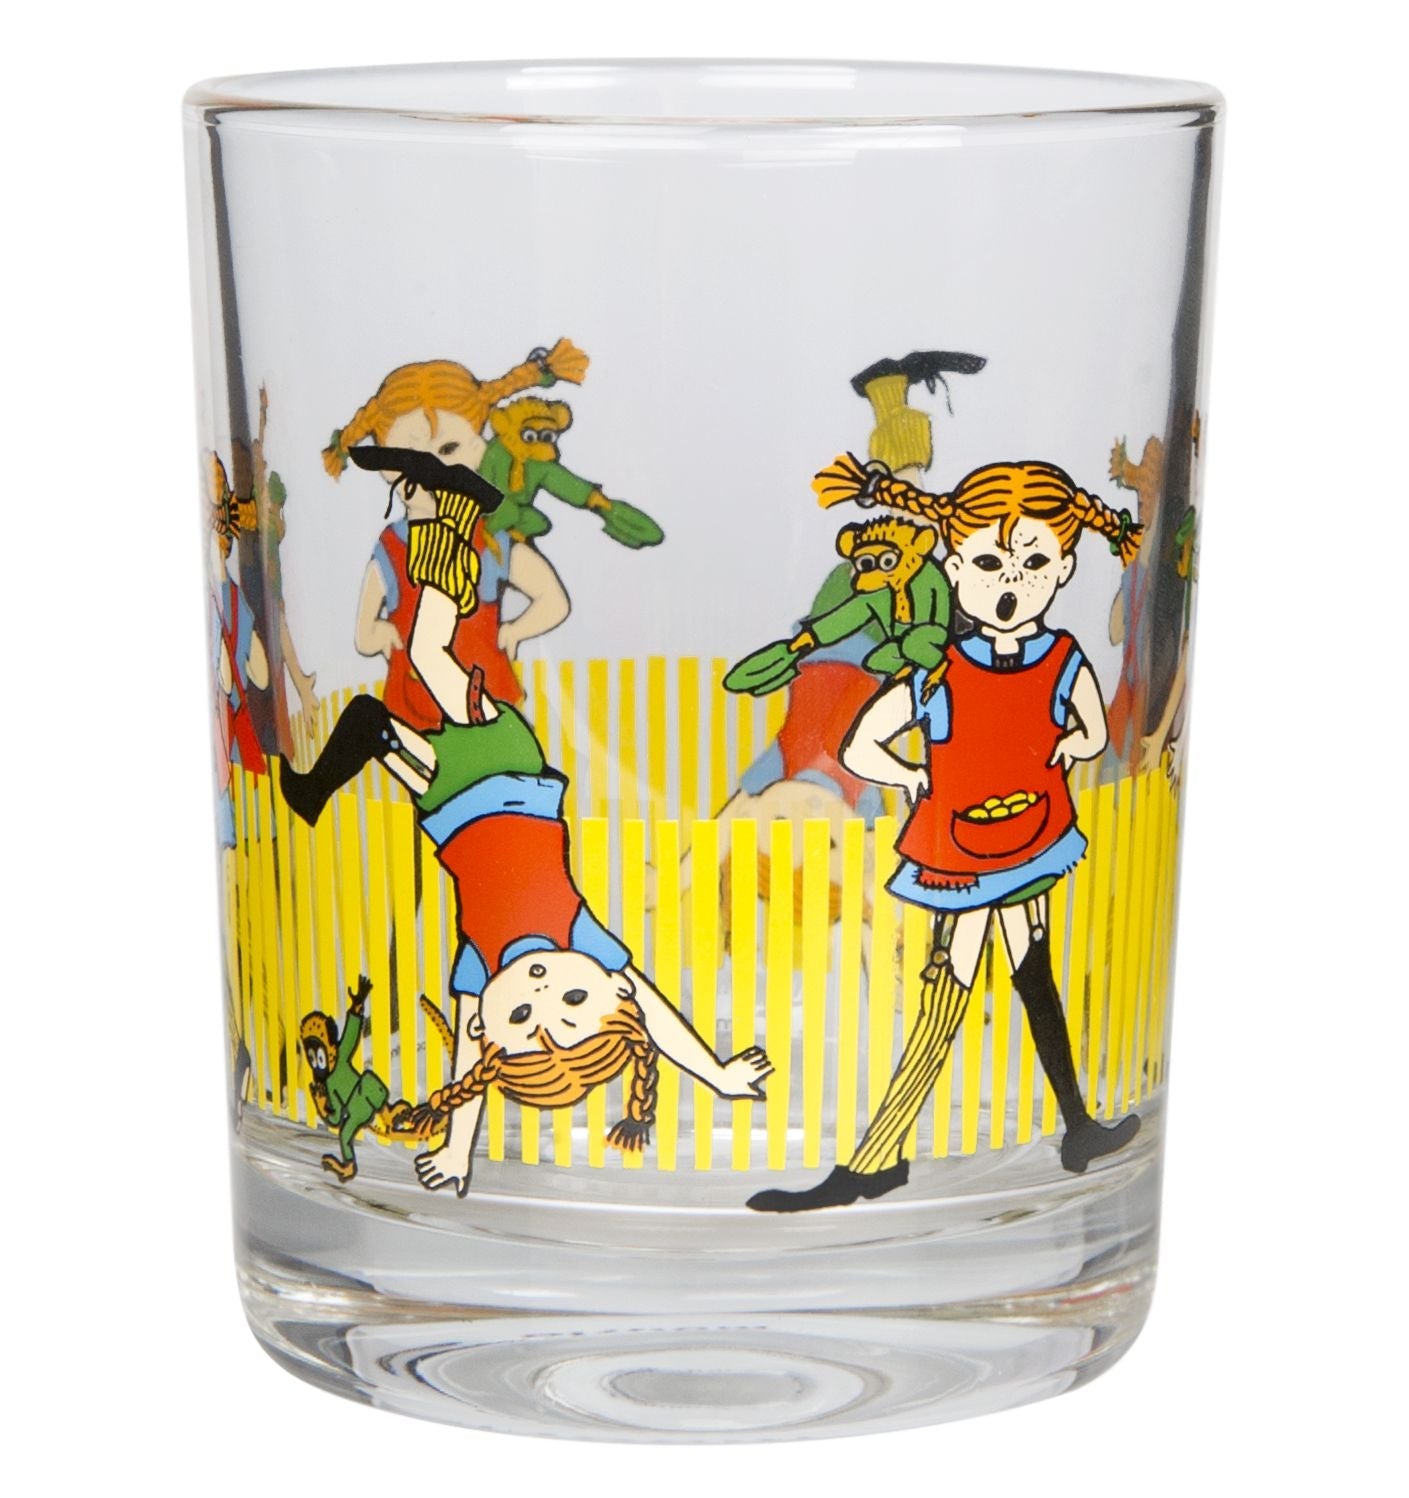 Muurla Pippi Longstocking Drink Glass, Pippi Longstocking